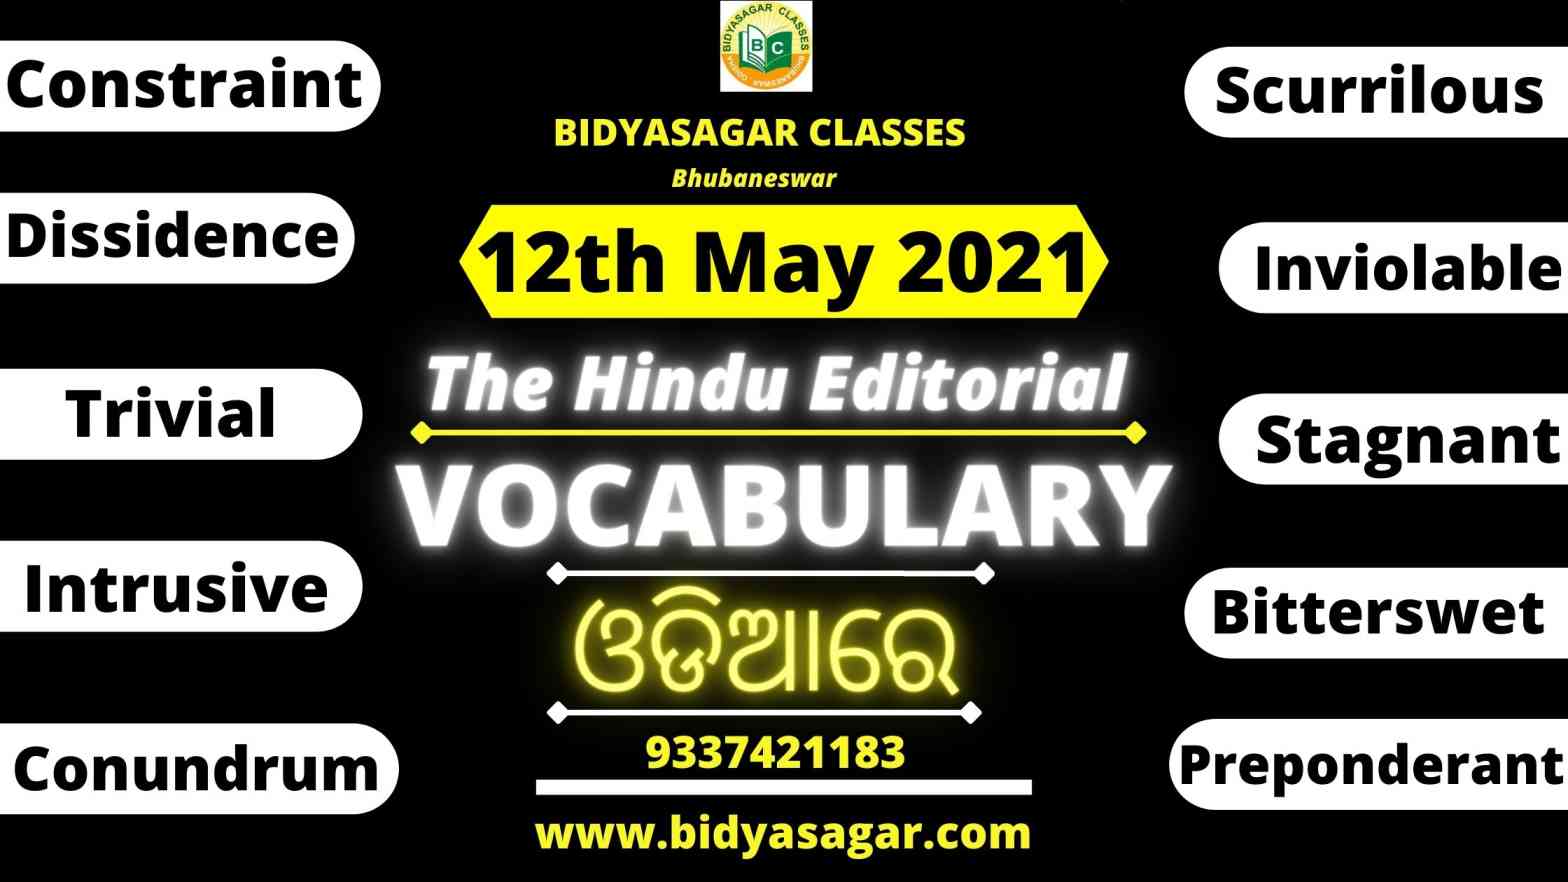 The Hindu Editorial Vocabulary of 12th May 2021